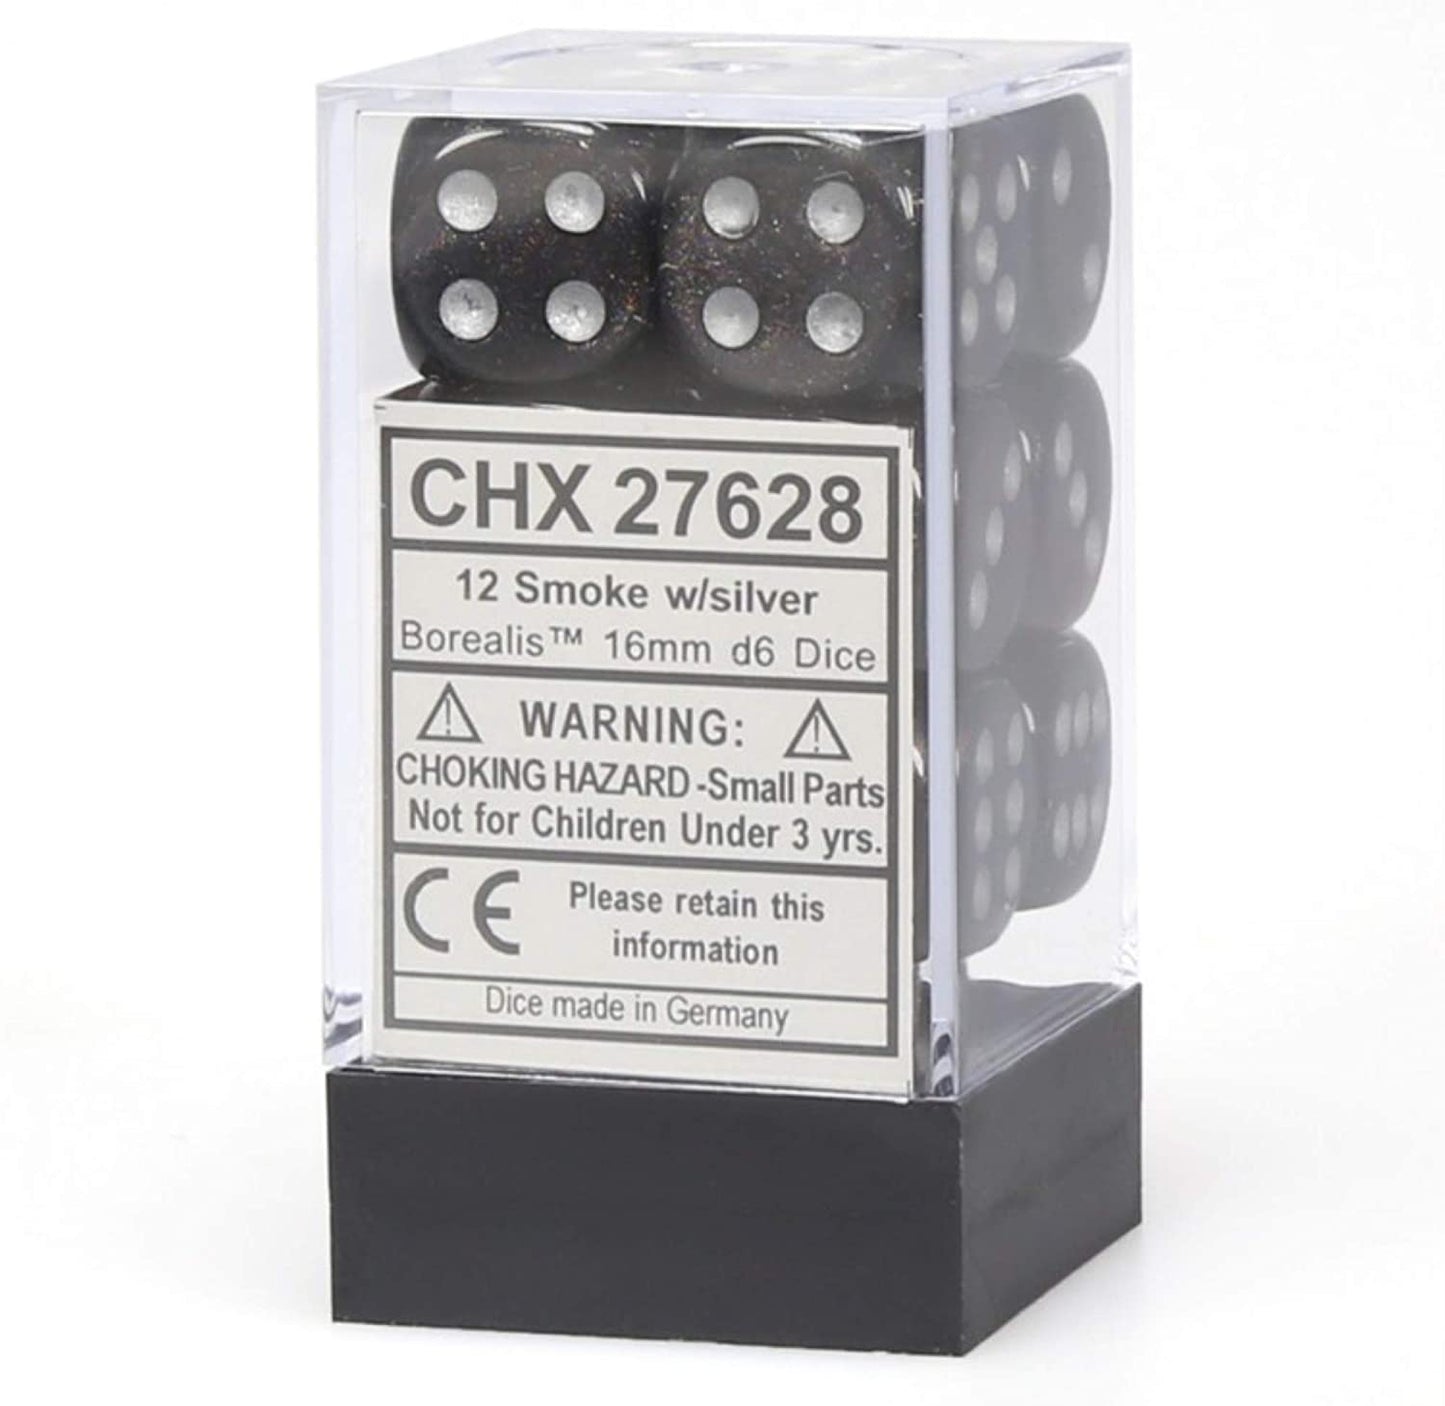 Chessex Dice: D6 Block 16mm - Borealis - Smoke with Silver (CHX 27628) - Gamescape